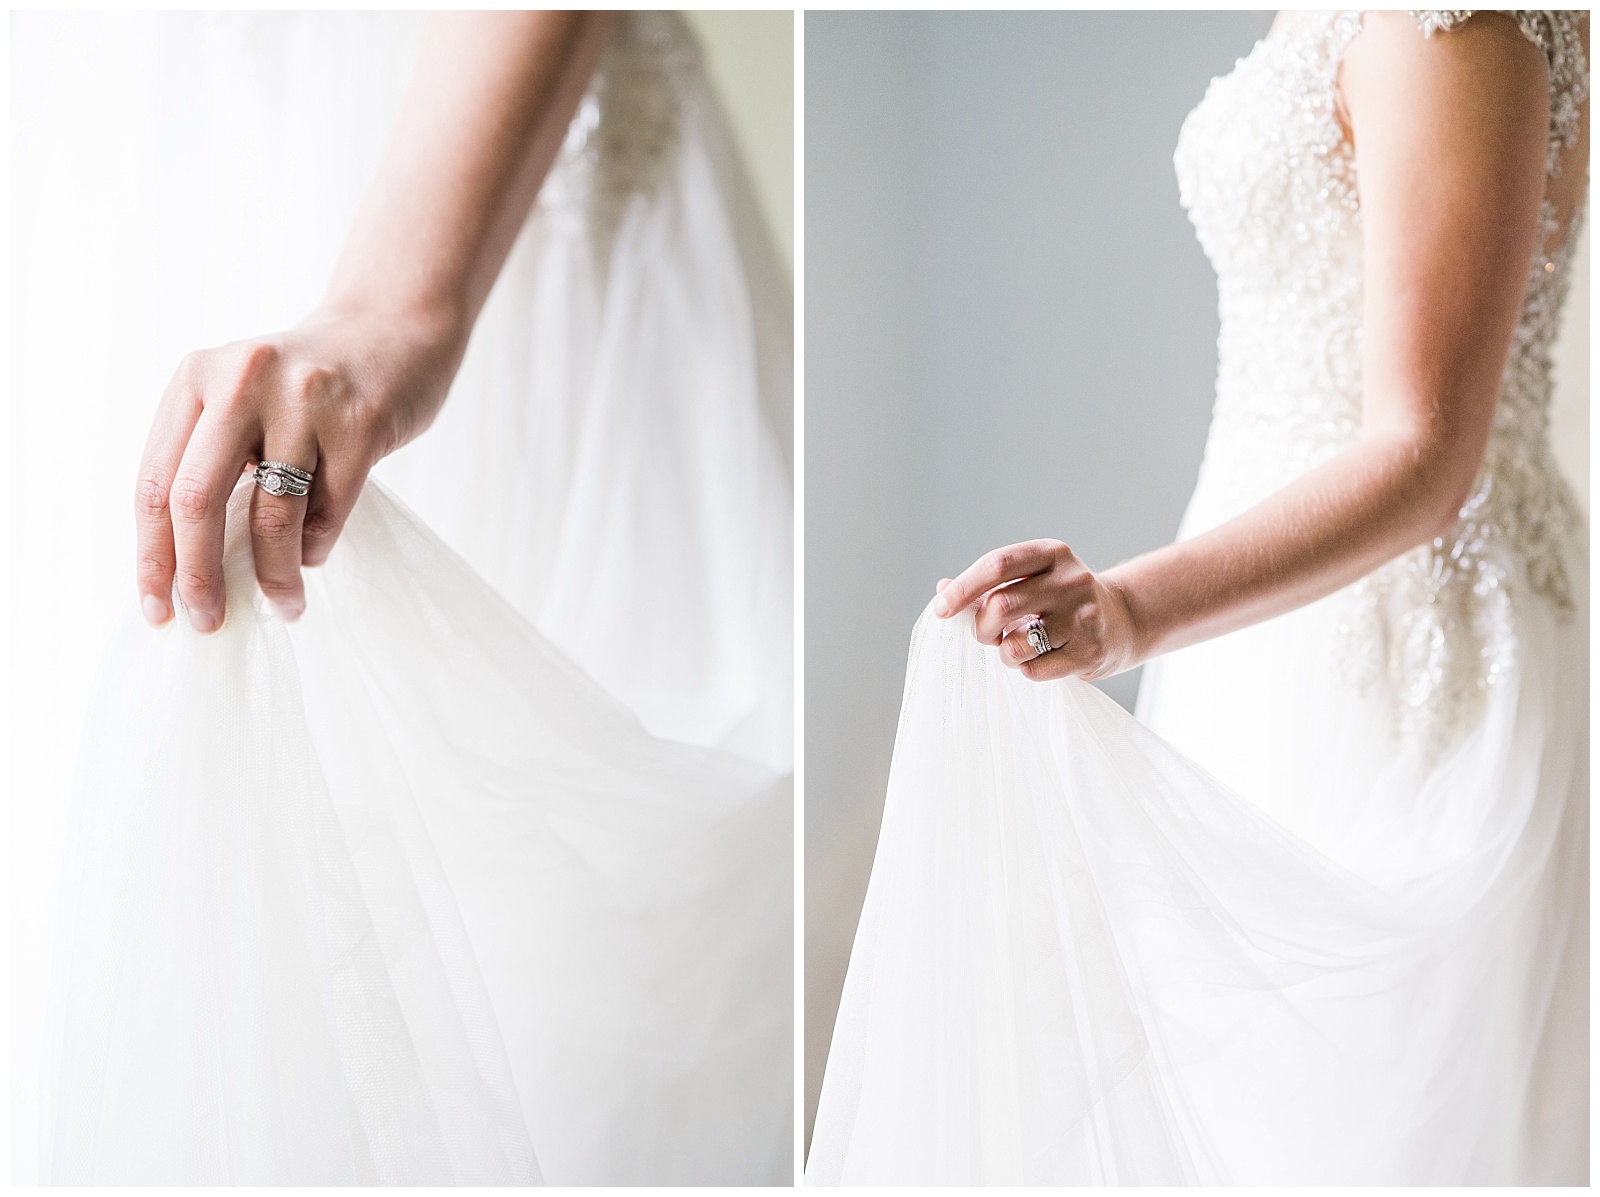 up close image of engagement ring and bridal dress skirt